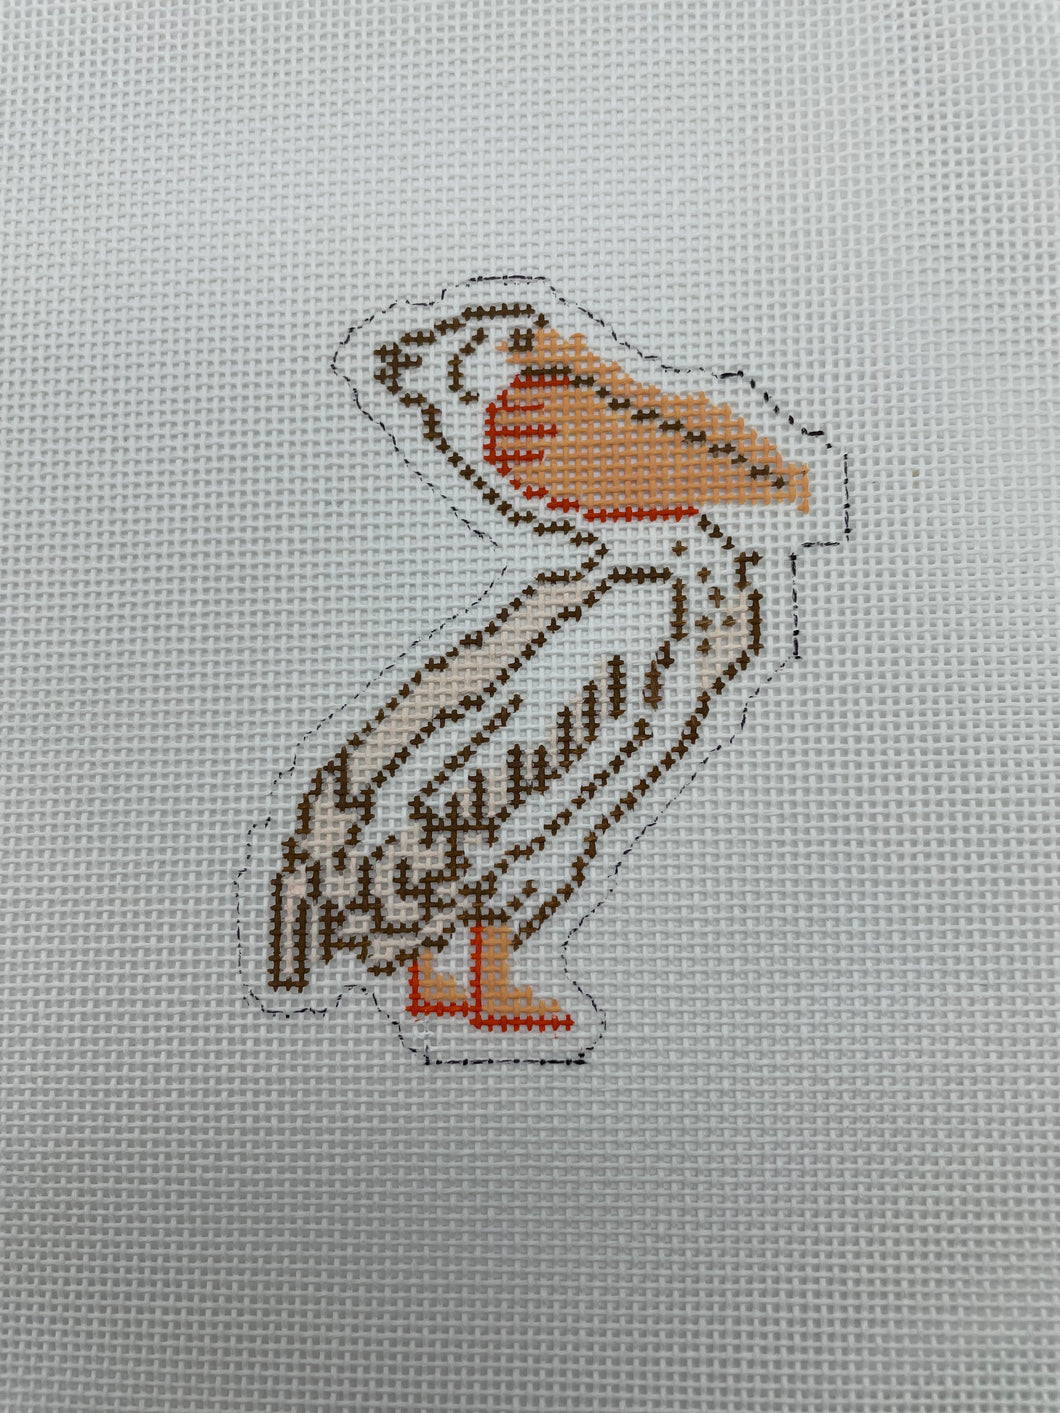 Louisiana Brown Pelican Needlepoint Ornament